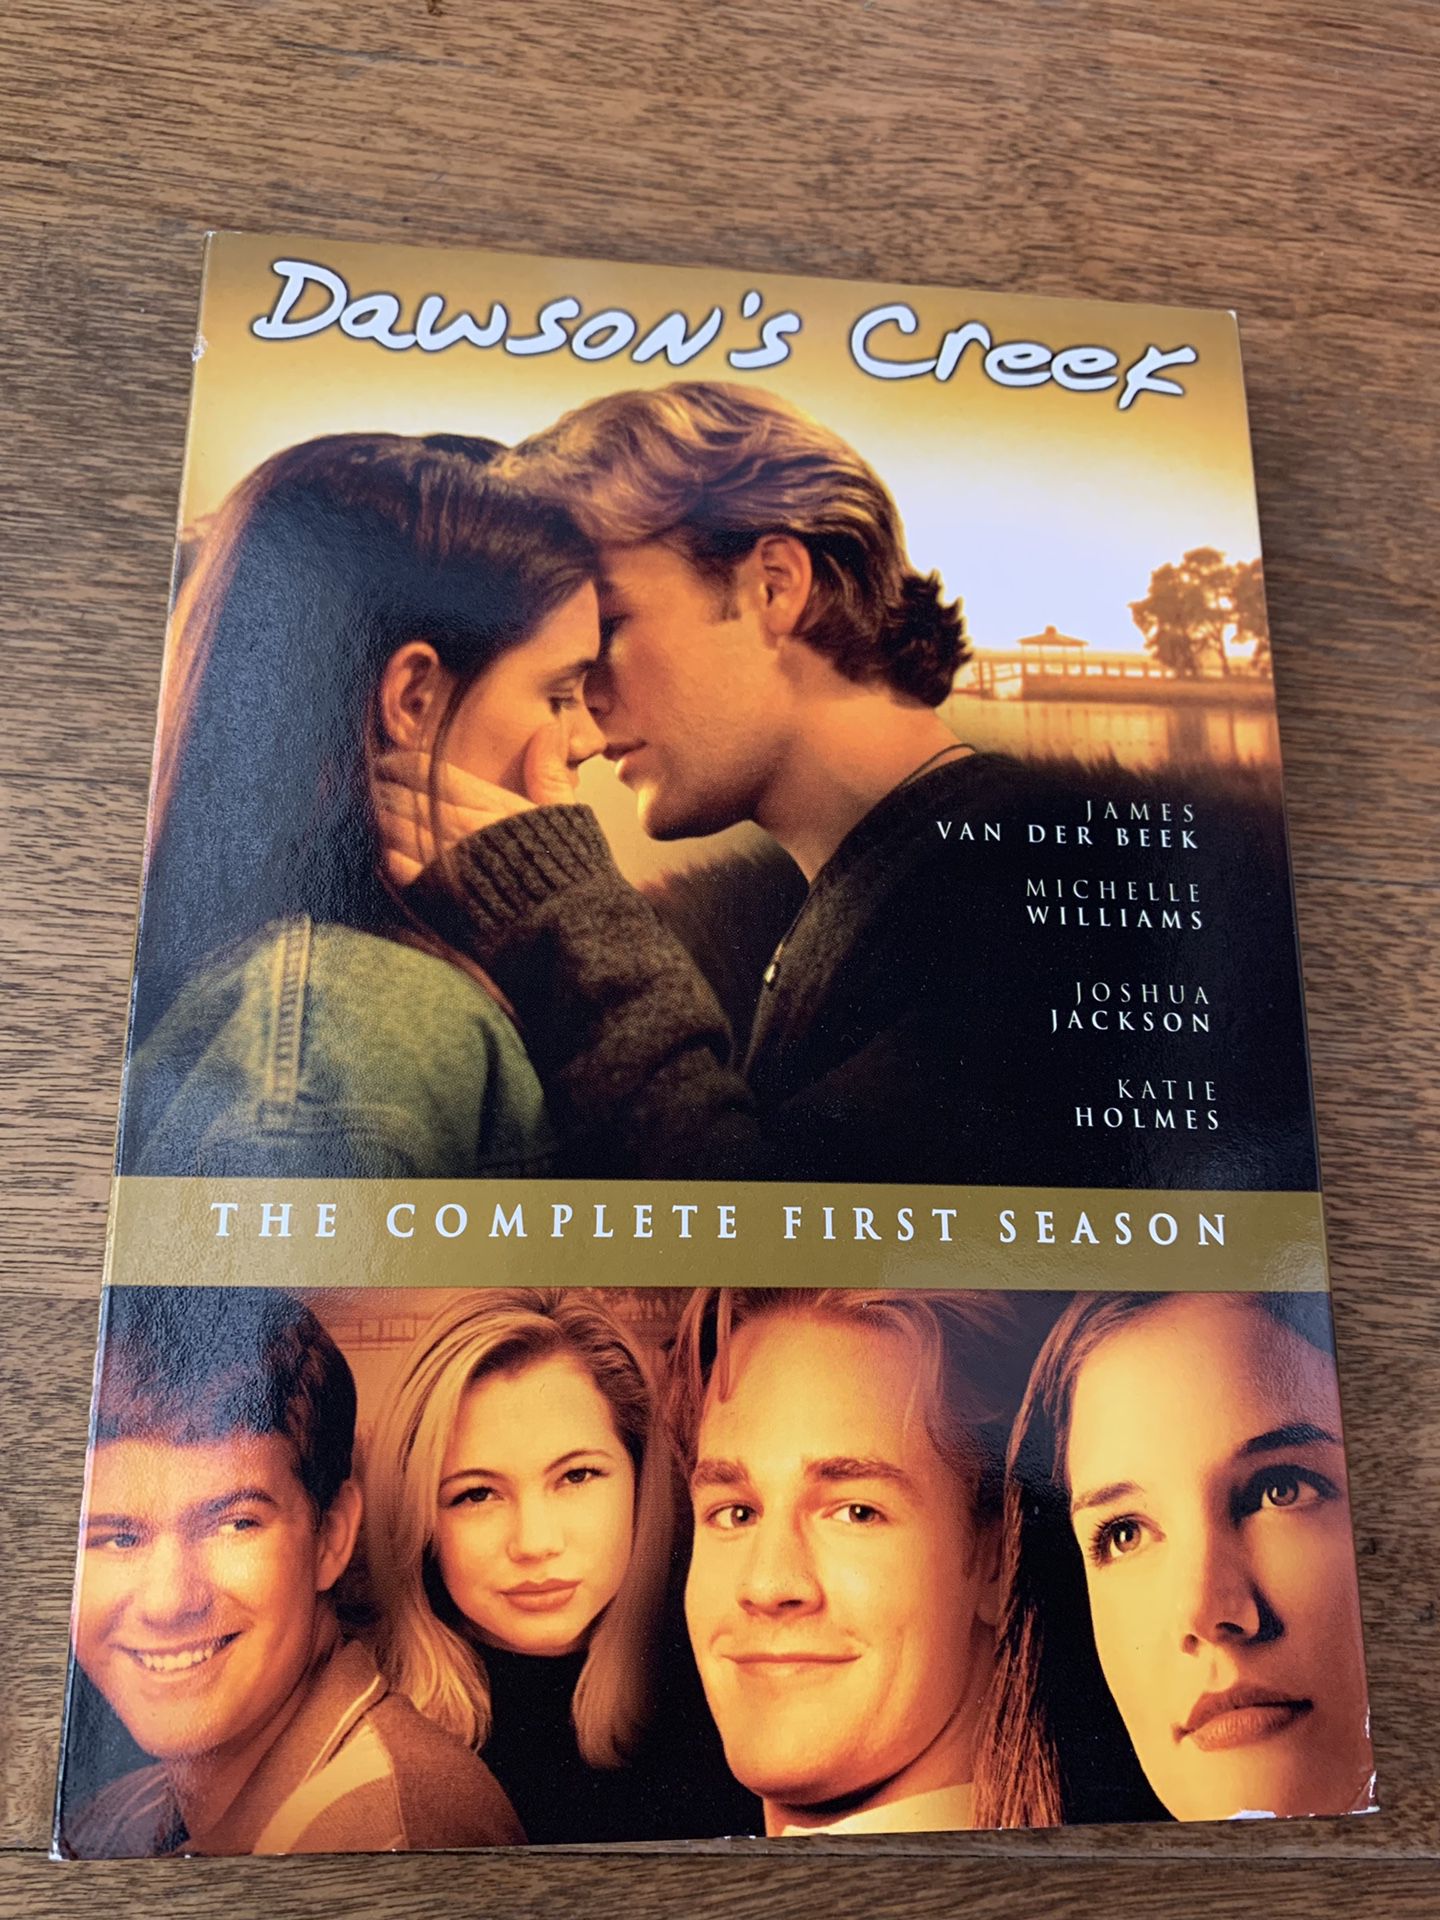 Dawson’s Creek season 1